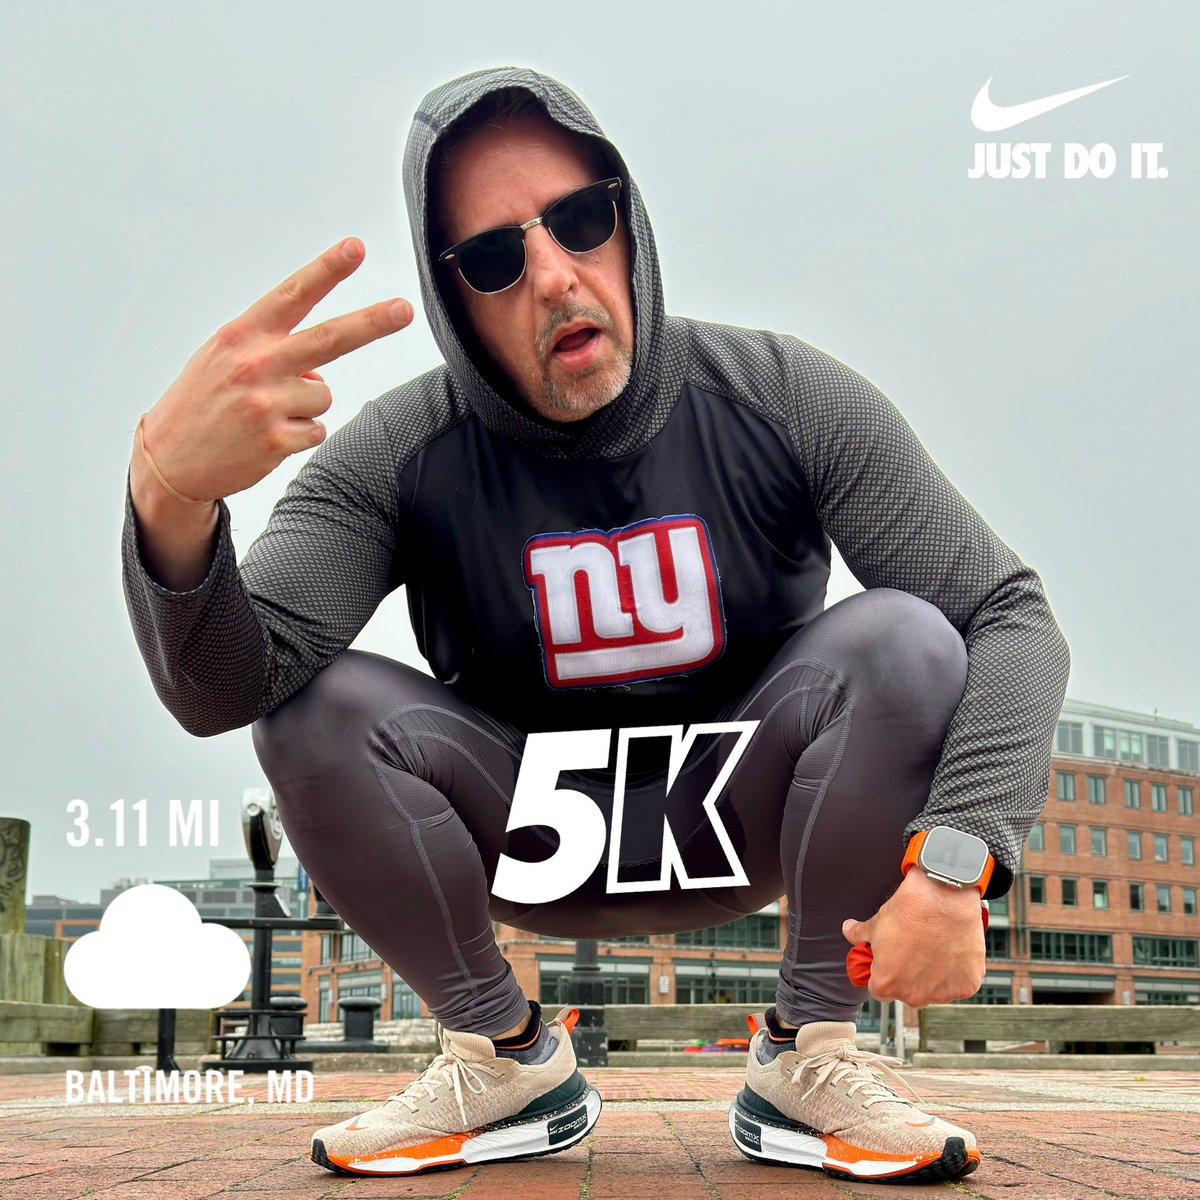 Ran 3.11 miles with Nike⁠ Run Club #JustDoIt #5k #race #dontstop #virtualrun #sundayrunday #everydamnmile #RunMD #nikerunning #everyrunhasapurpose #outdoorrunning #run #runchat #nikeplus #thisisaboutrunning  #thisisnotaboutrunning #insipiration #nikerunclub  🎉✌️🏃‍♂️@nike